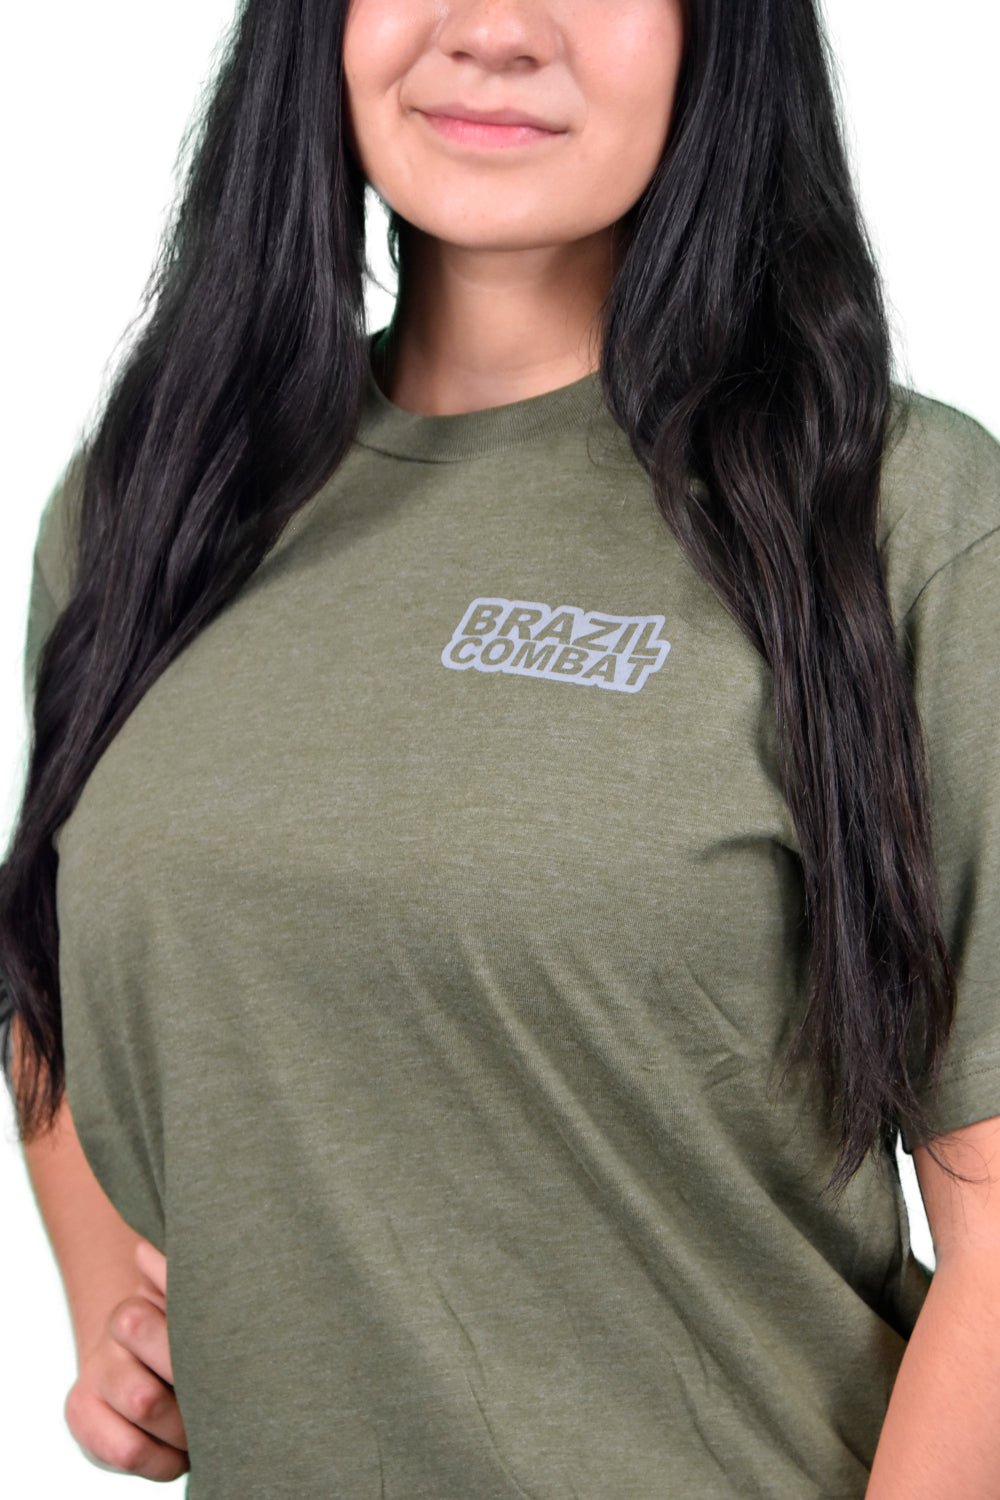 Brazil Combat Female T-Shirt - Everyday Wear